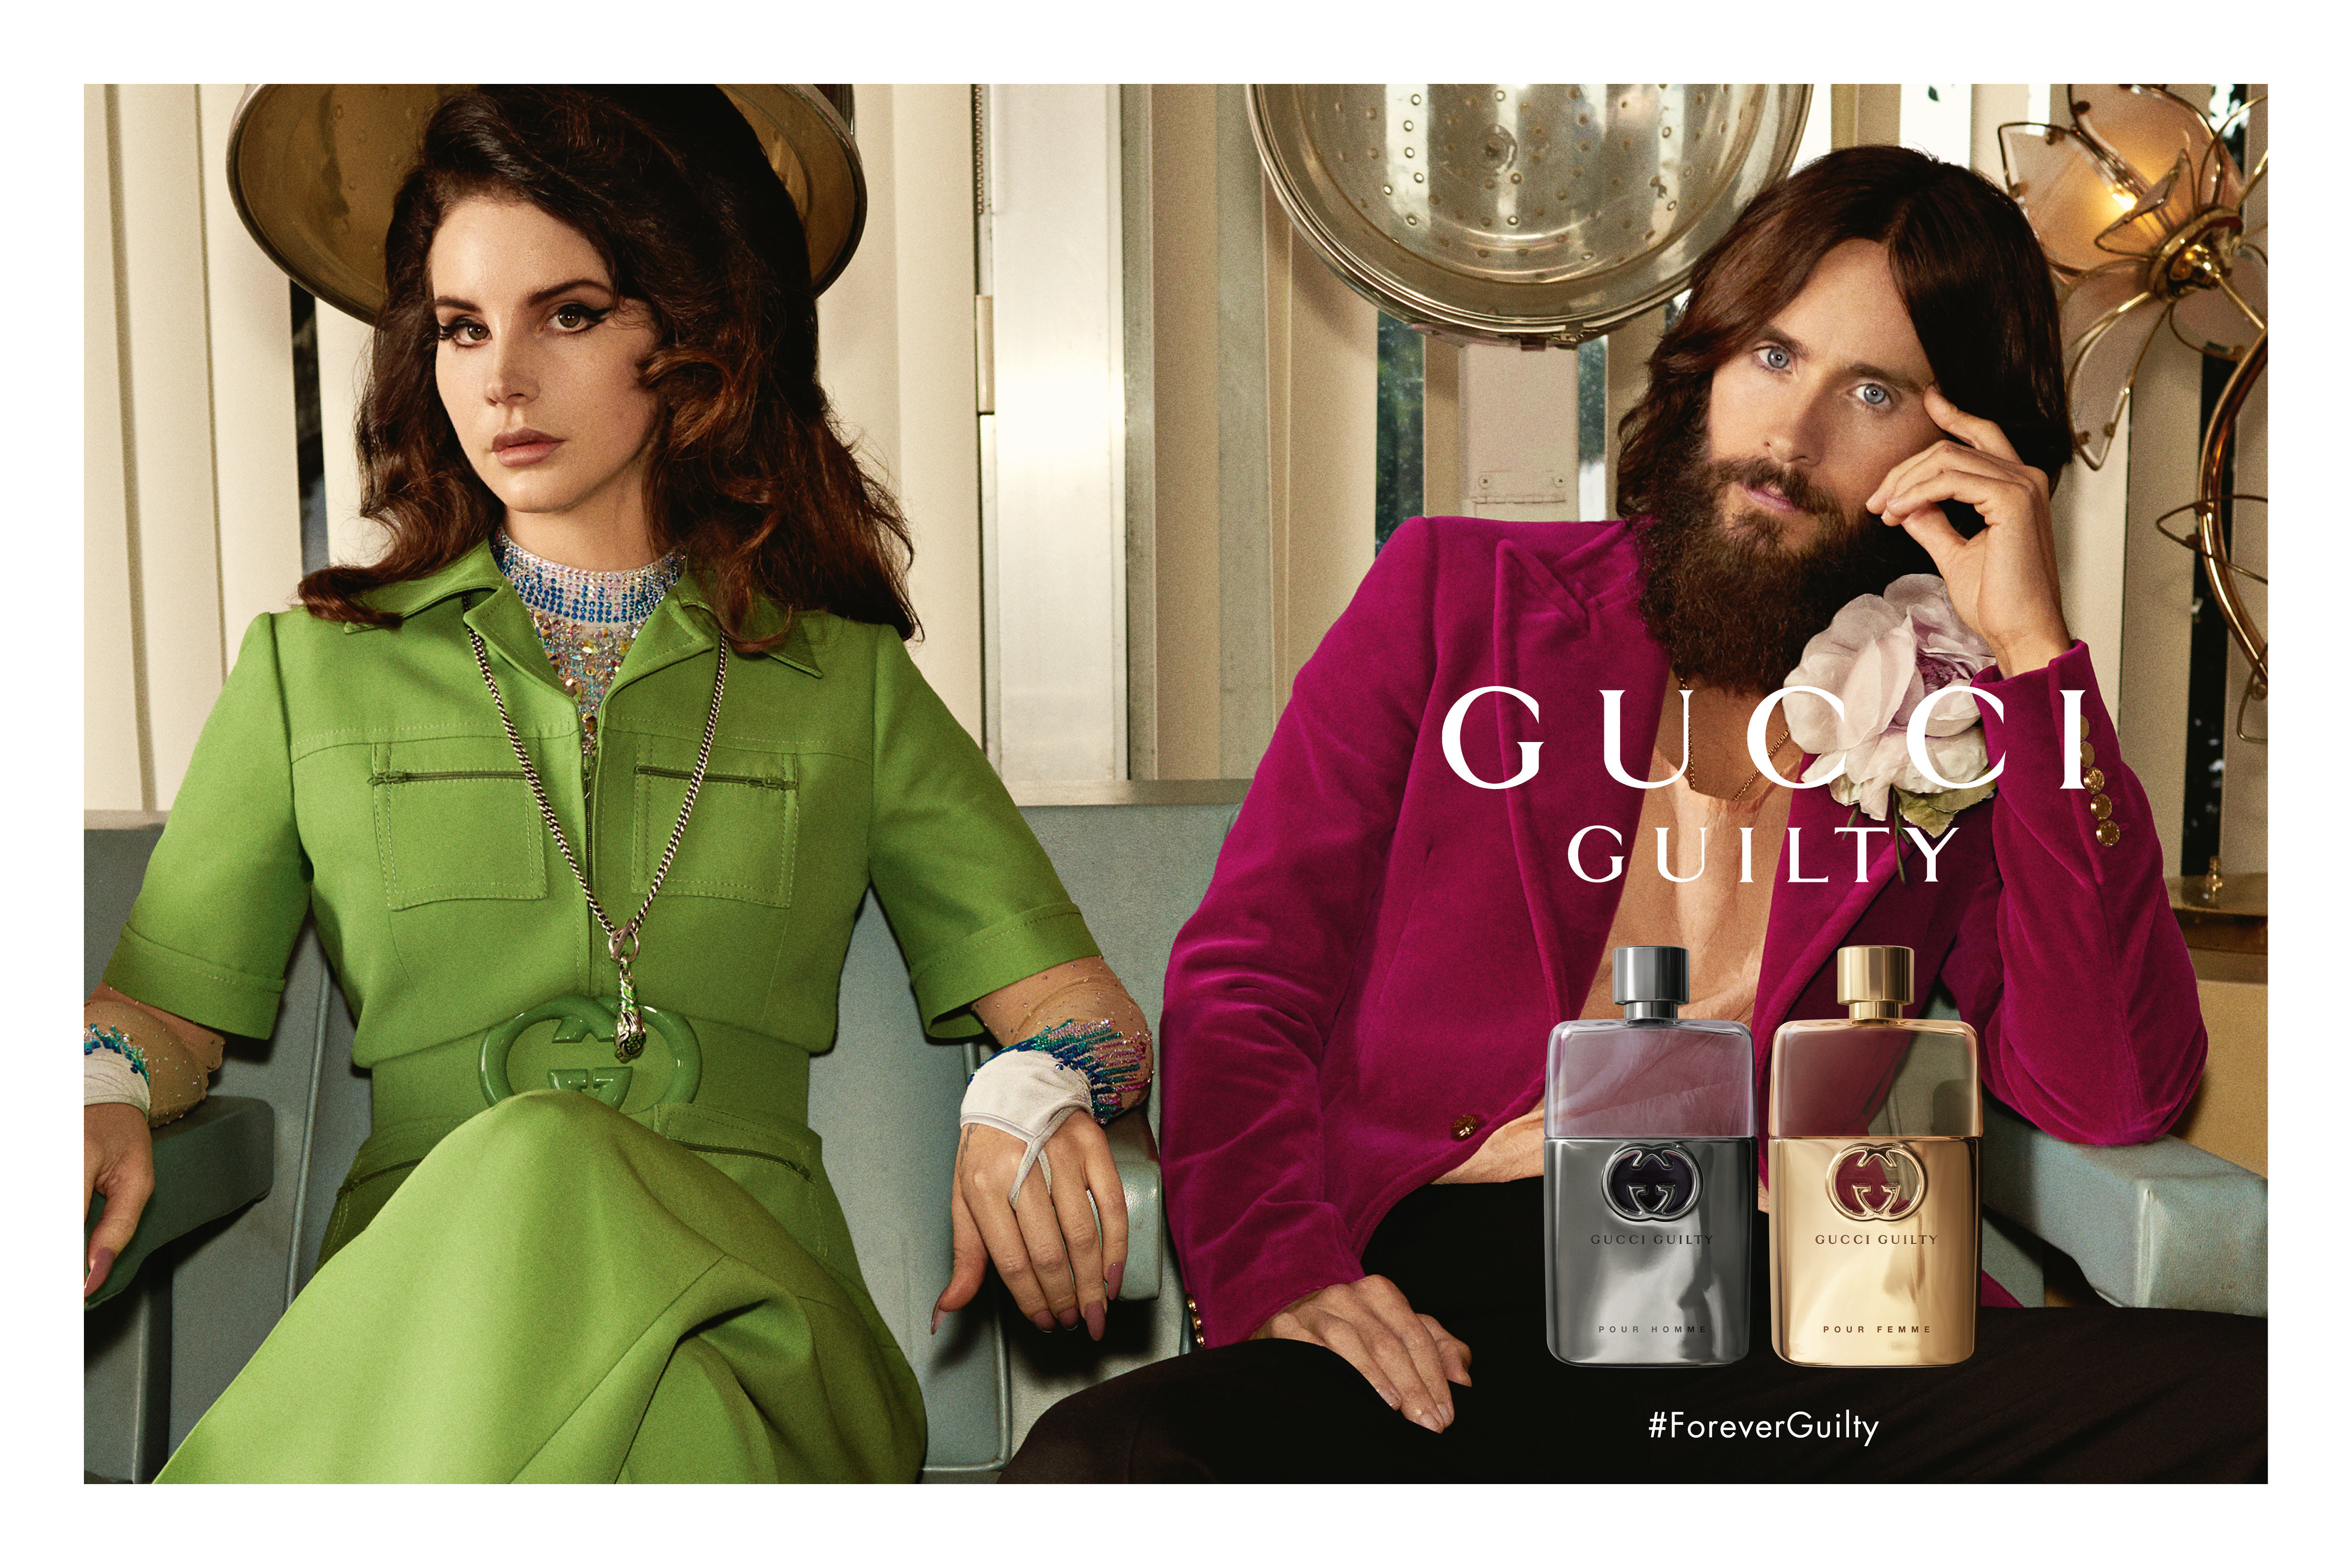 Lana Del Rey Star in Gucci Guilty 